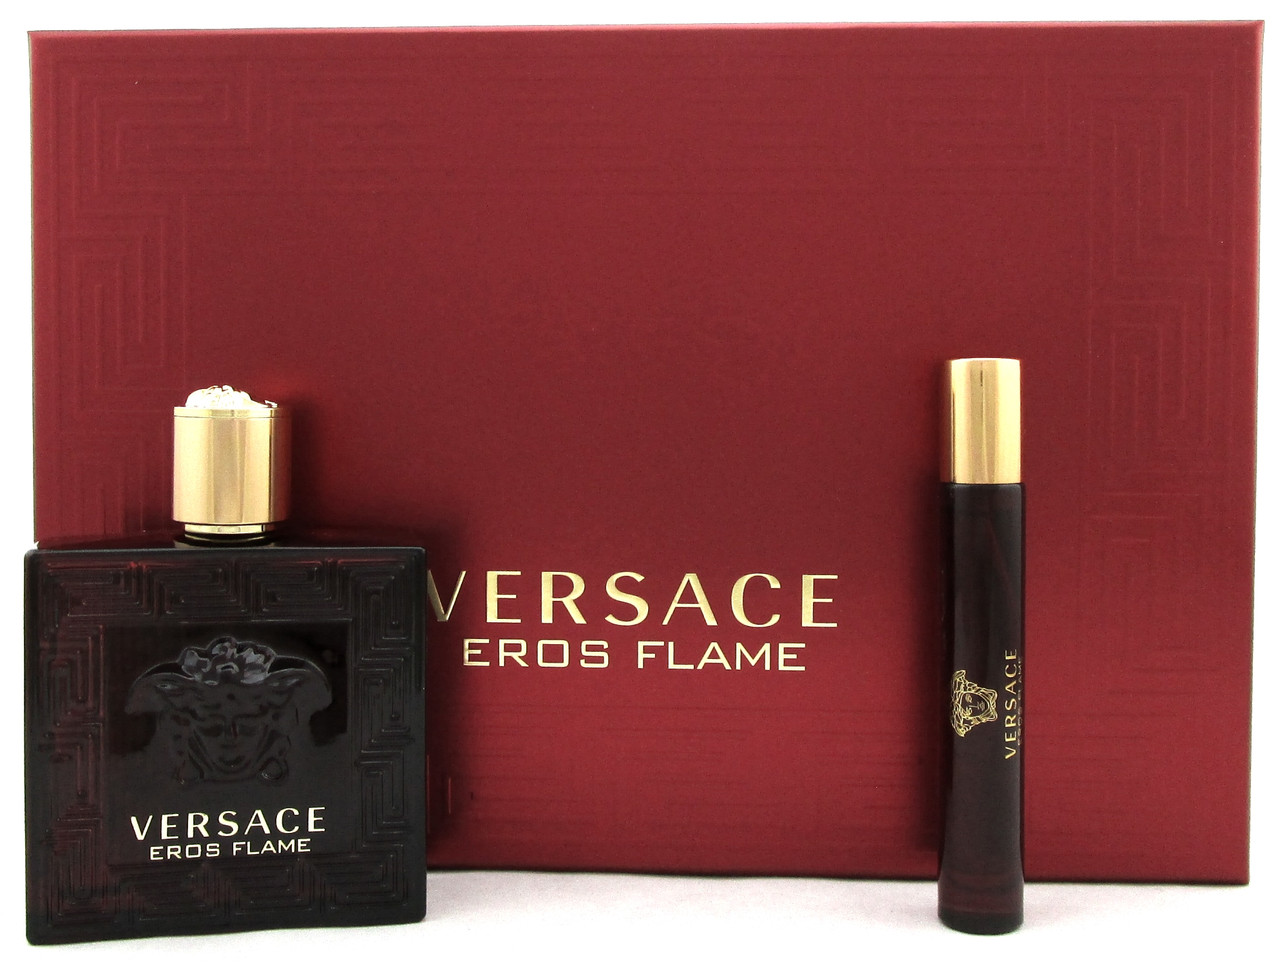 Versace Eros Flame Men Eau de Parfum Spray - 3.4 oz.